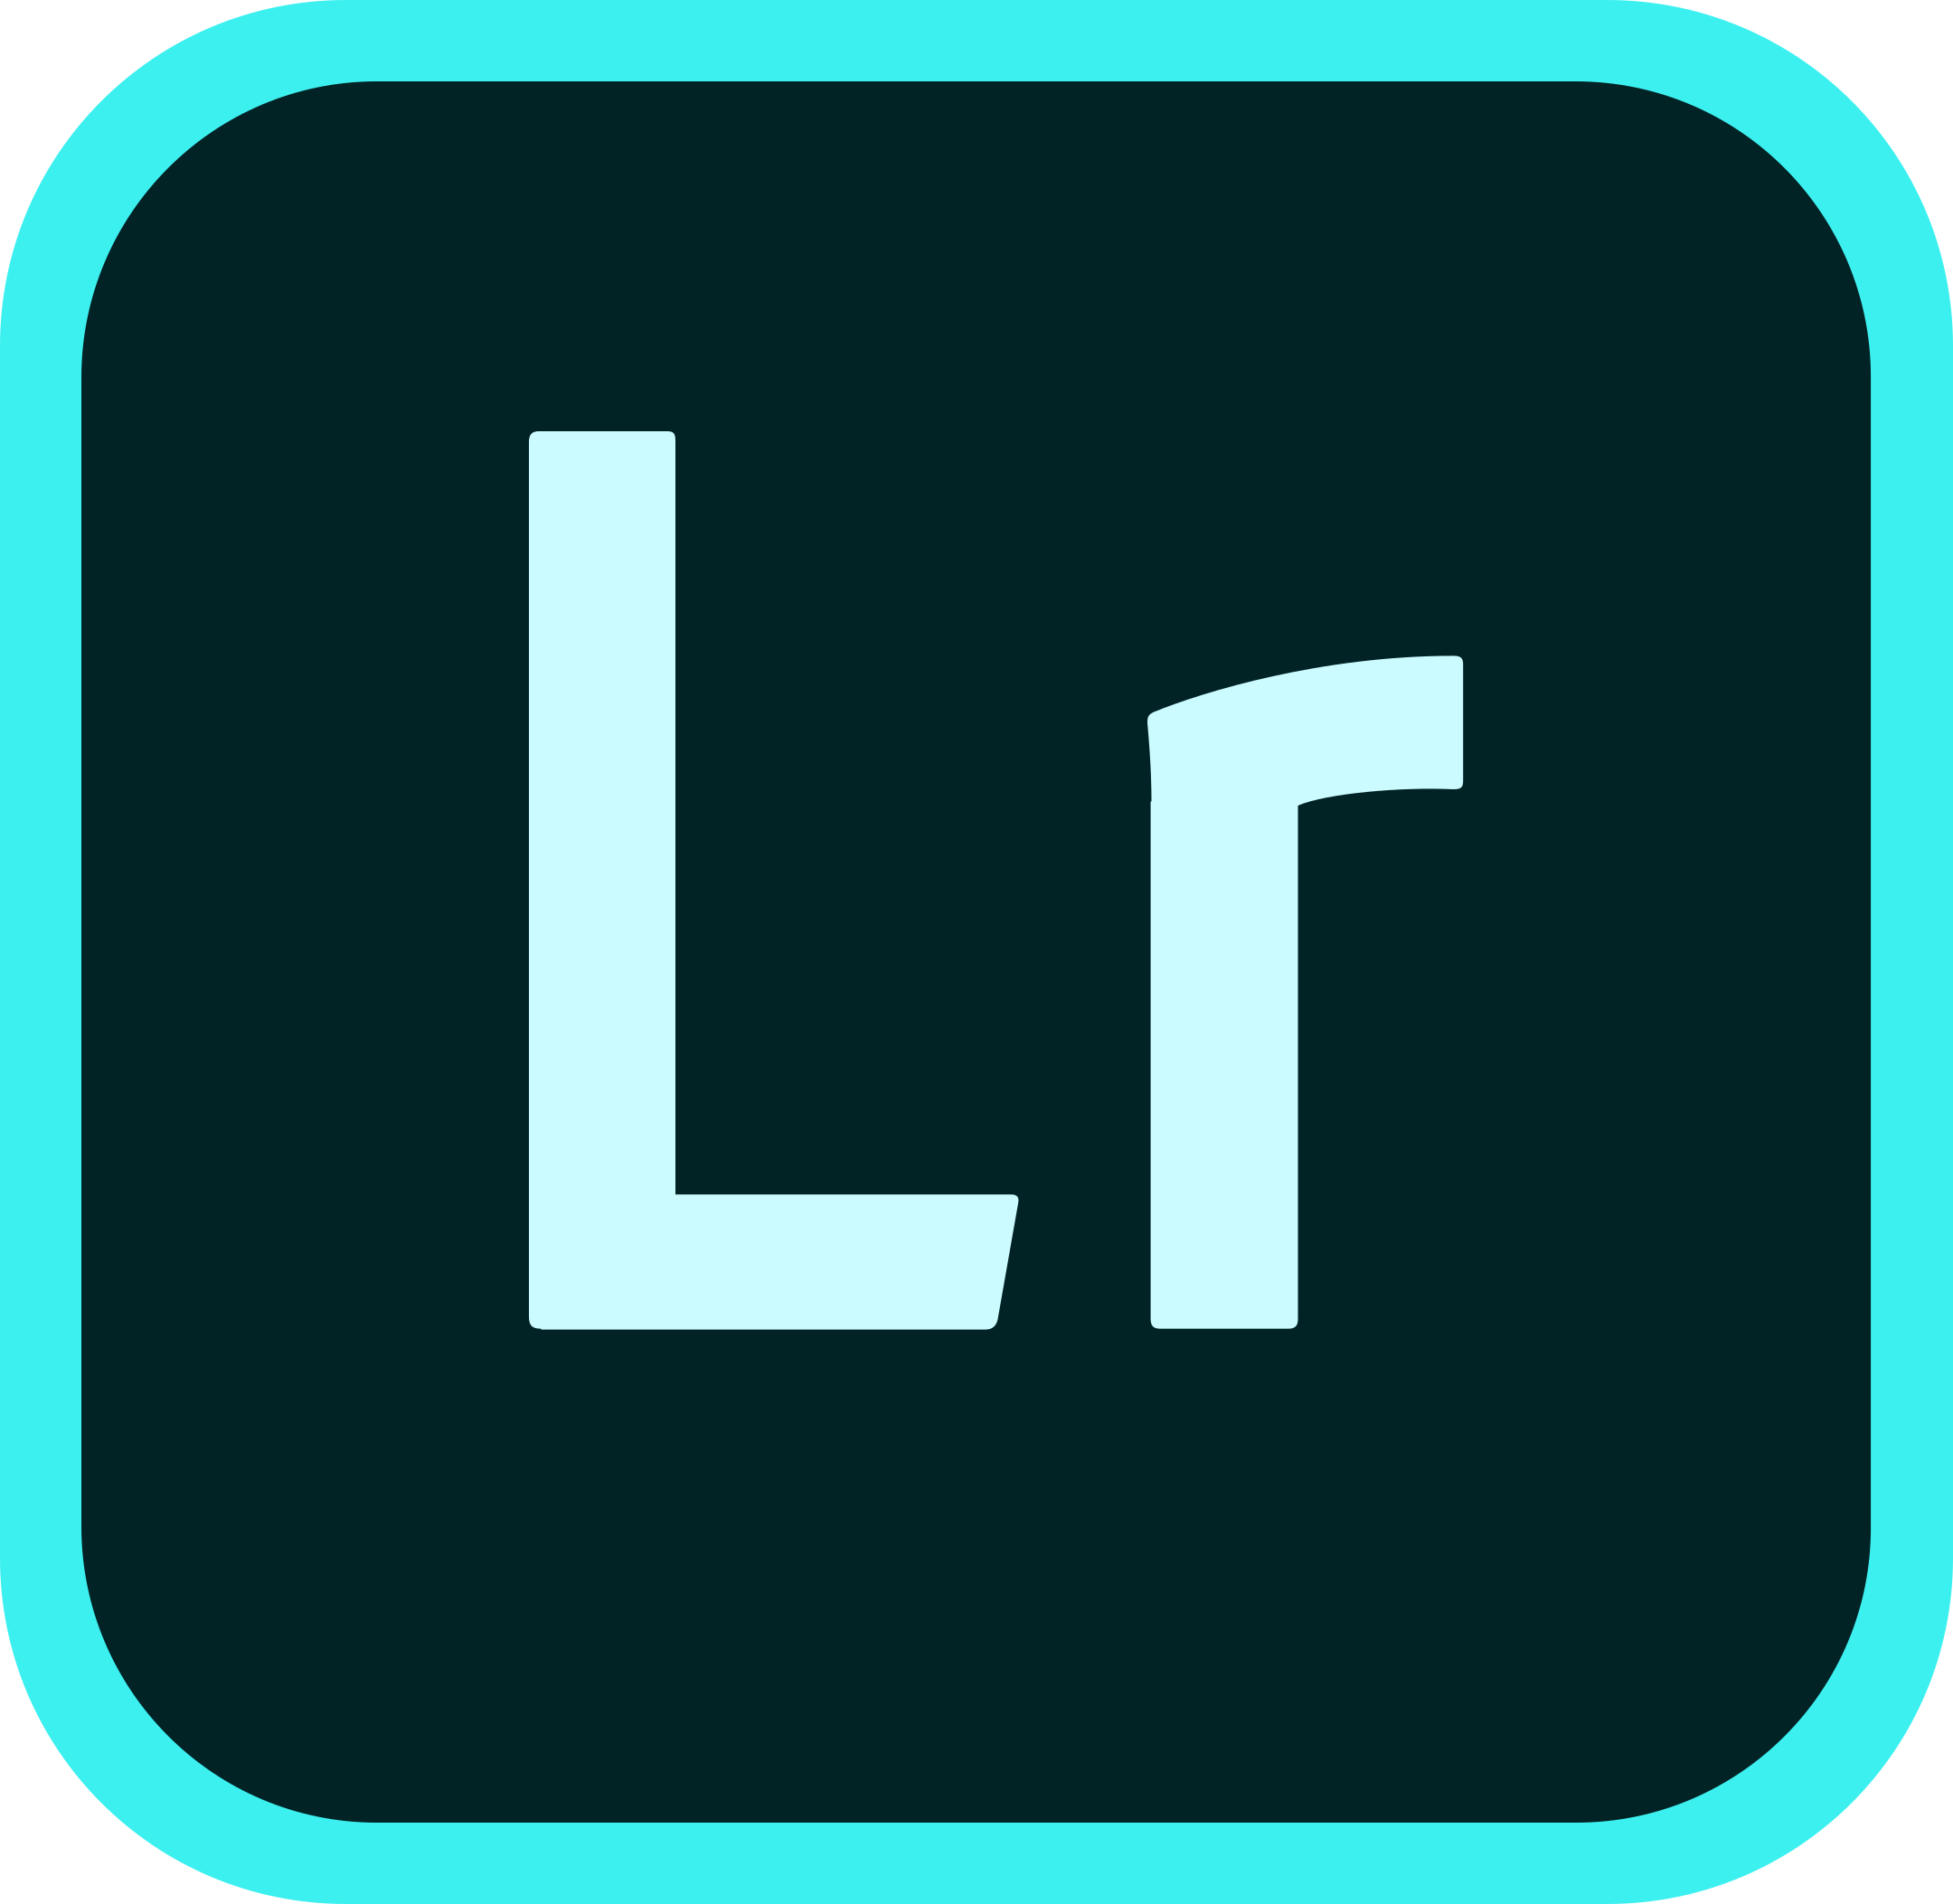 lightroom logo 1 - Adobe Lightroom Logo